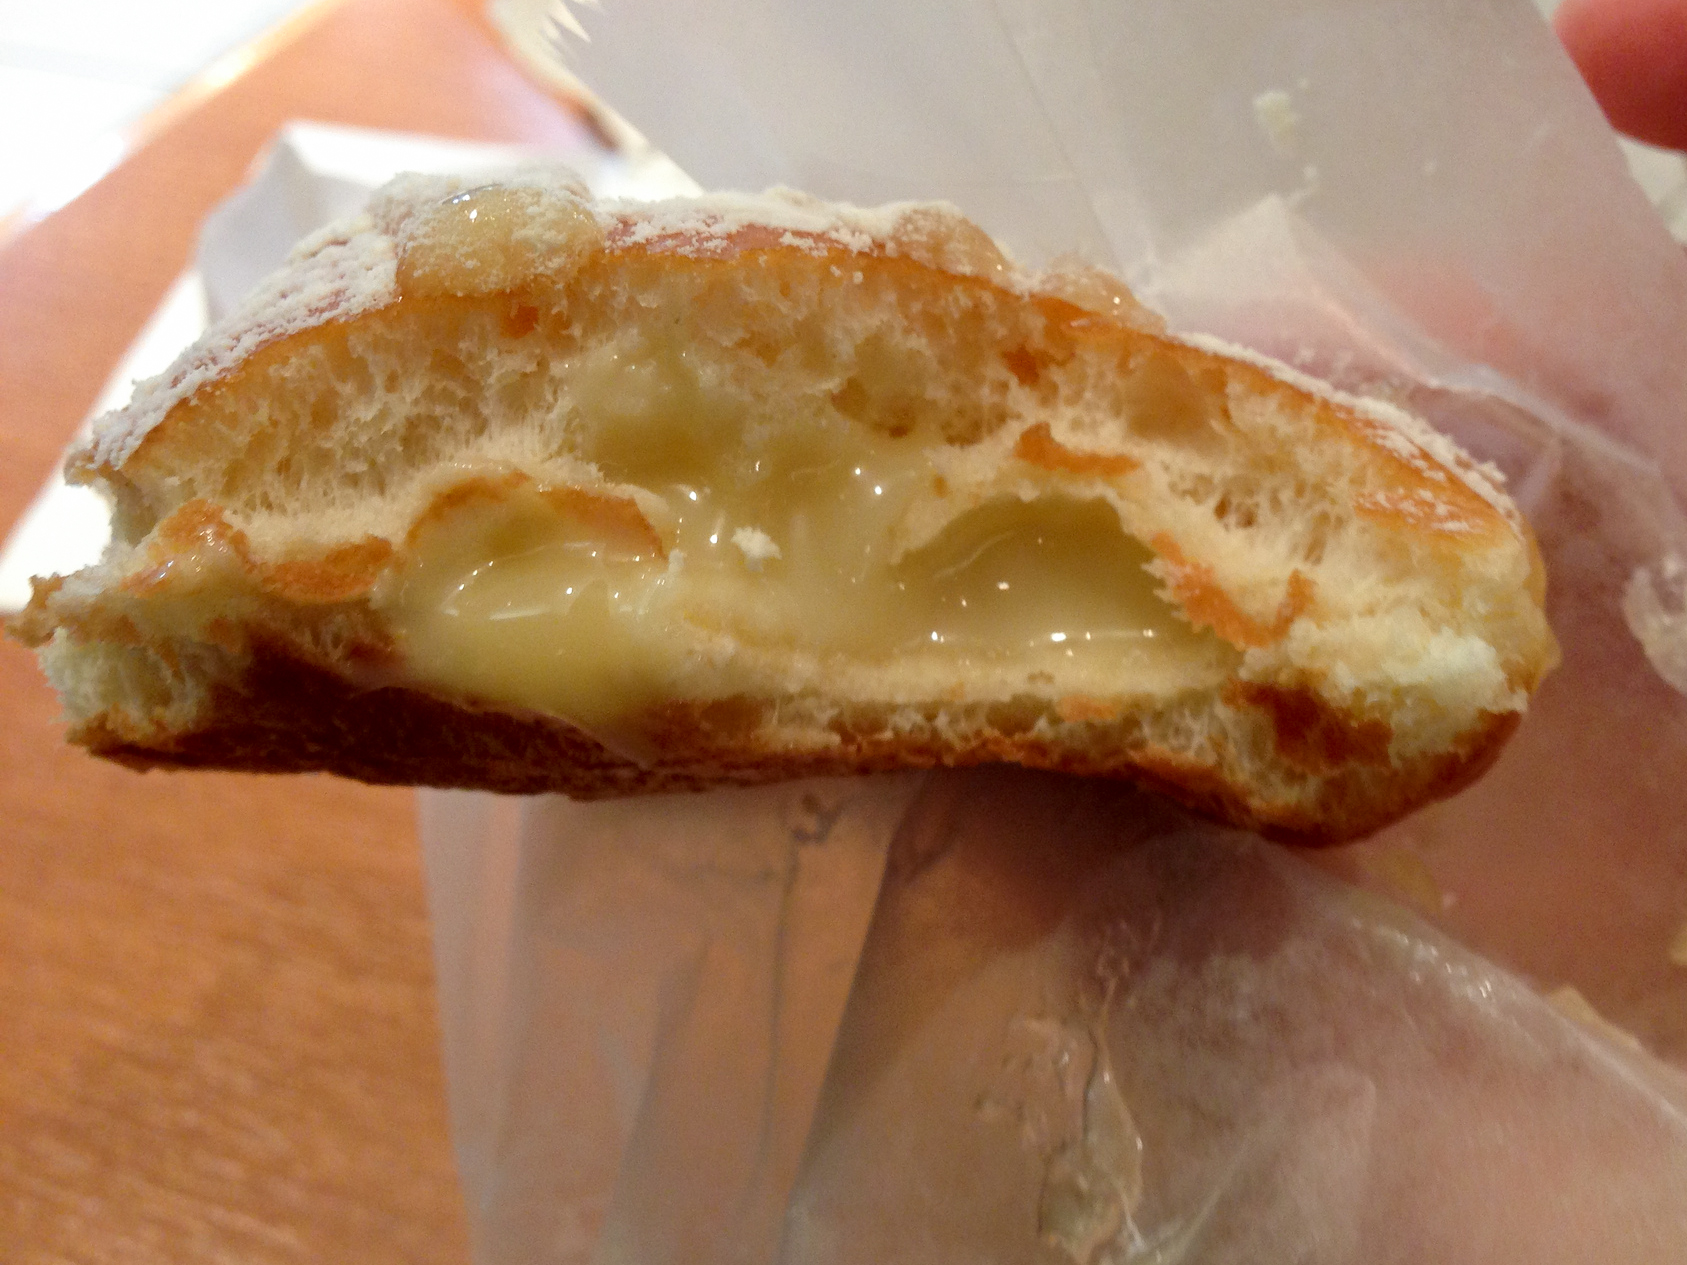 Filled doughnut at Krispy Kreme in Tokyo. Photo by alphacityguides.